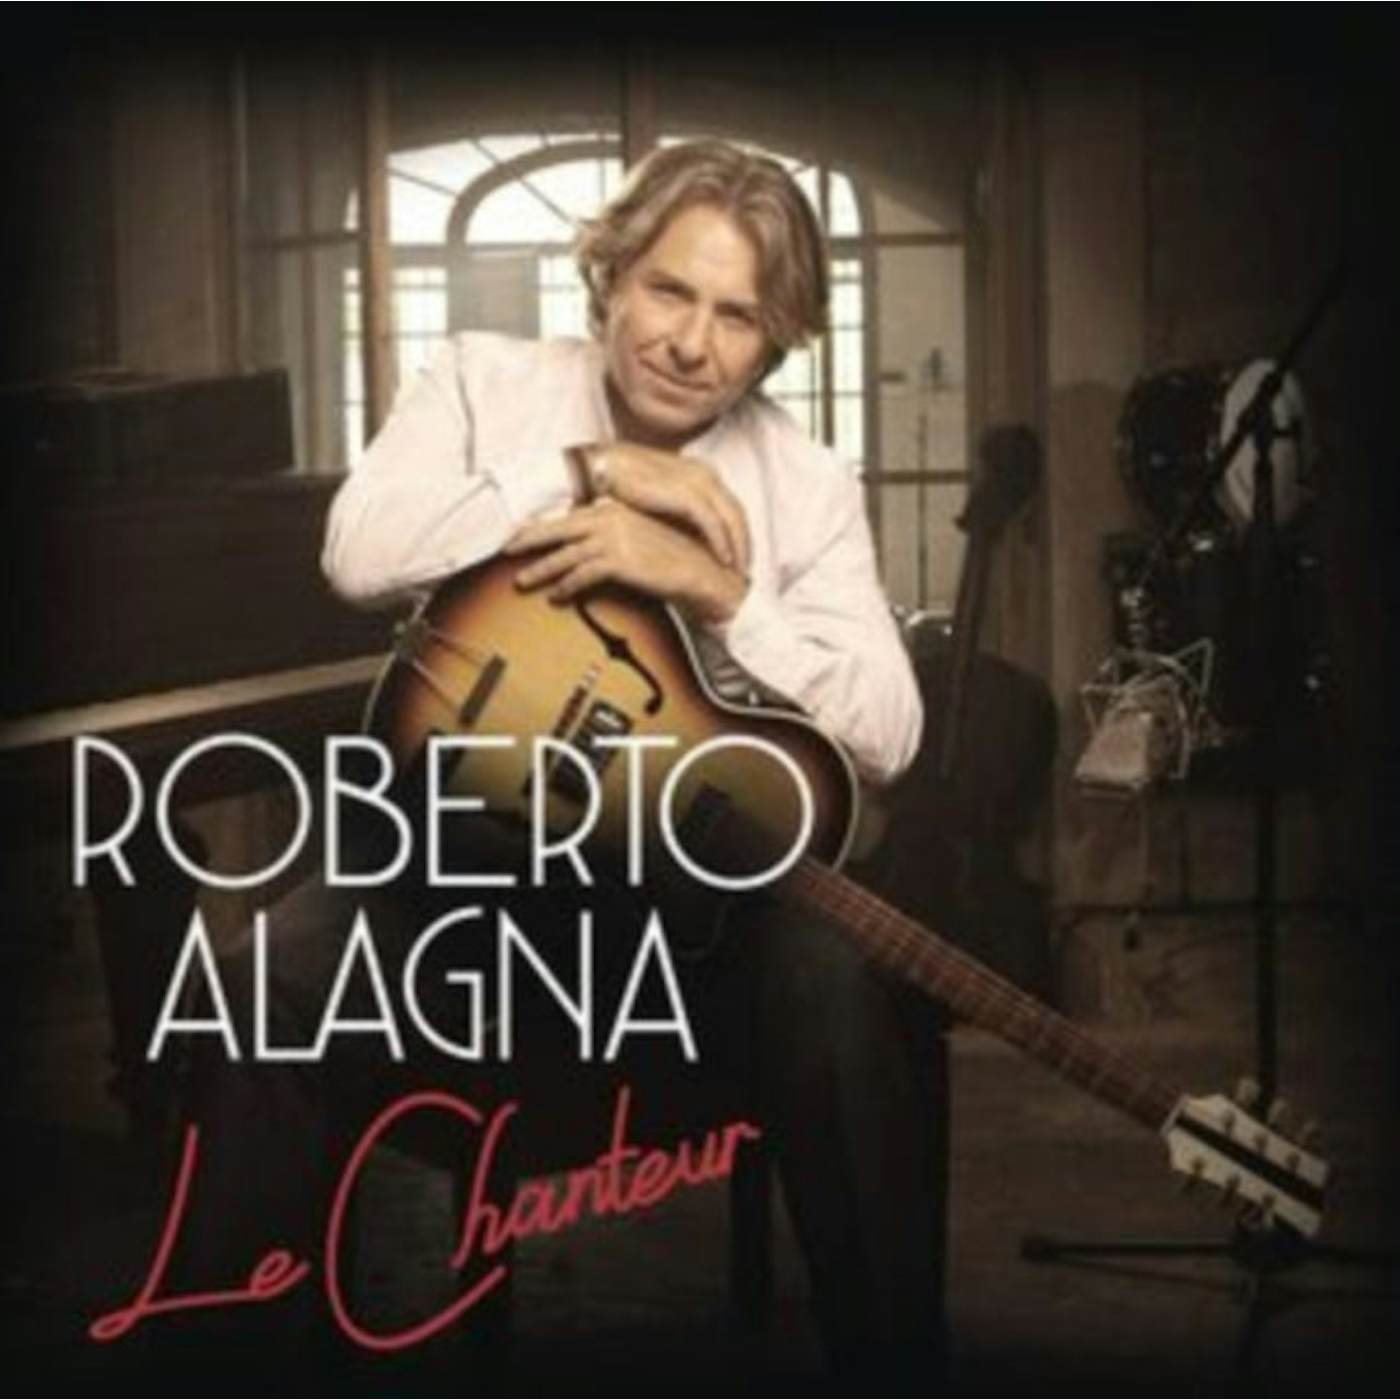 Roberto Alagna CD - Le Chanteur